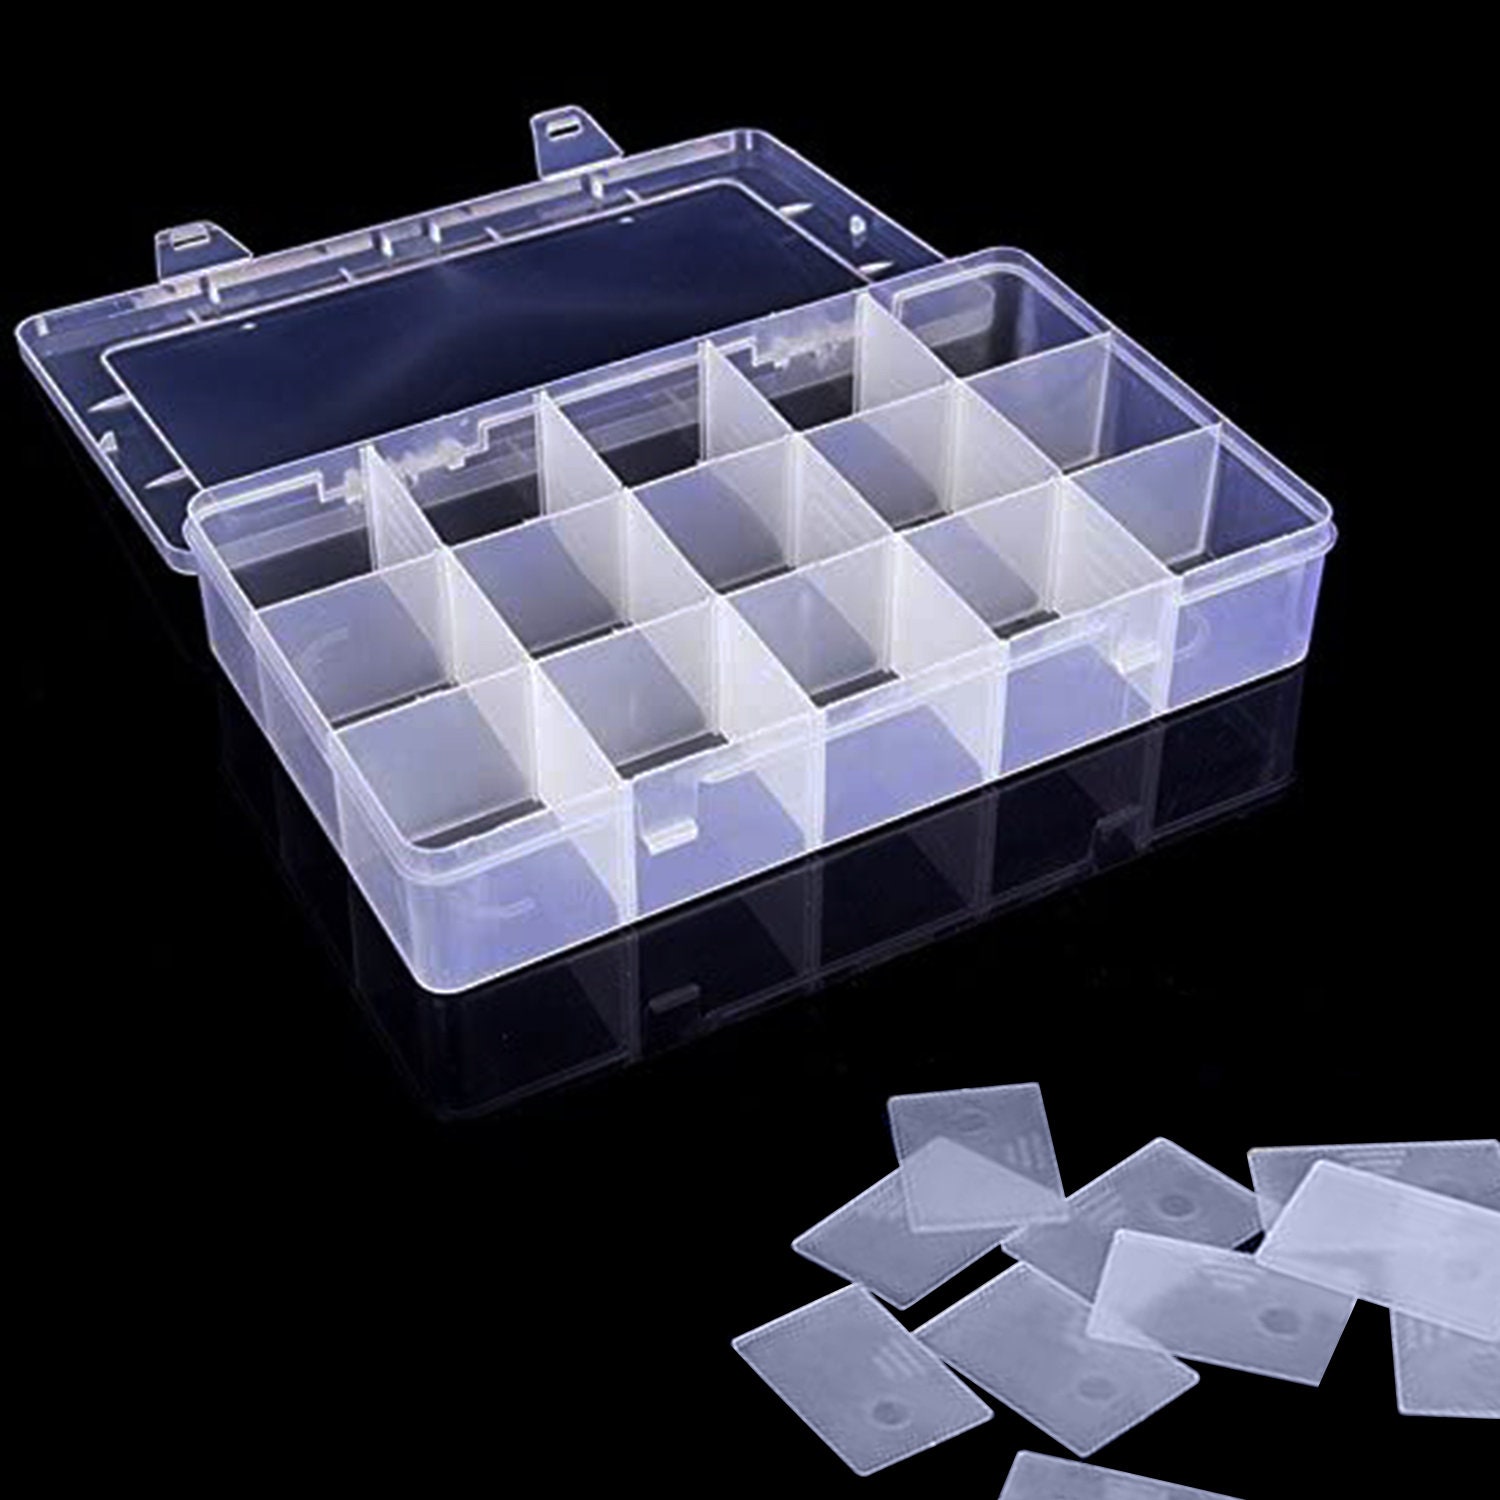 Storage Box Adjustable Compartments